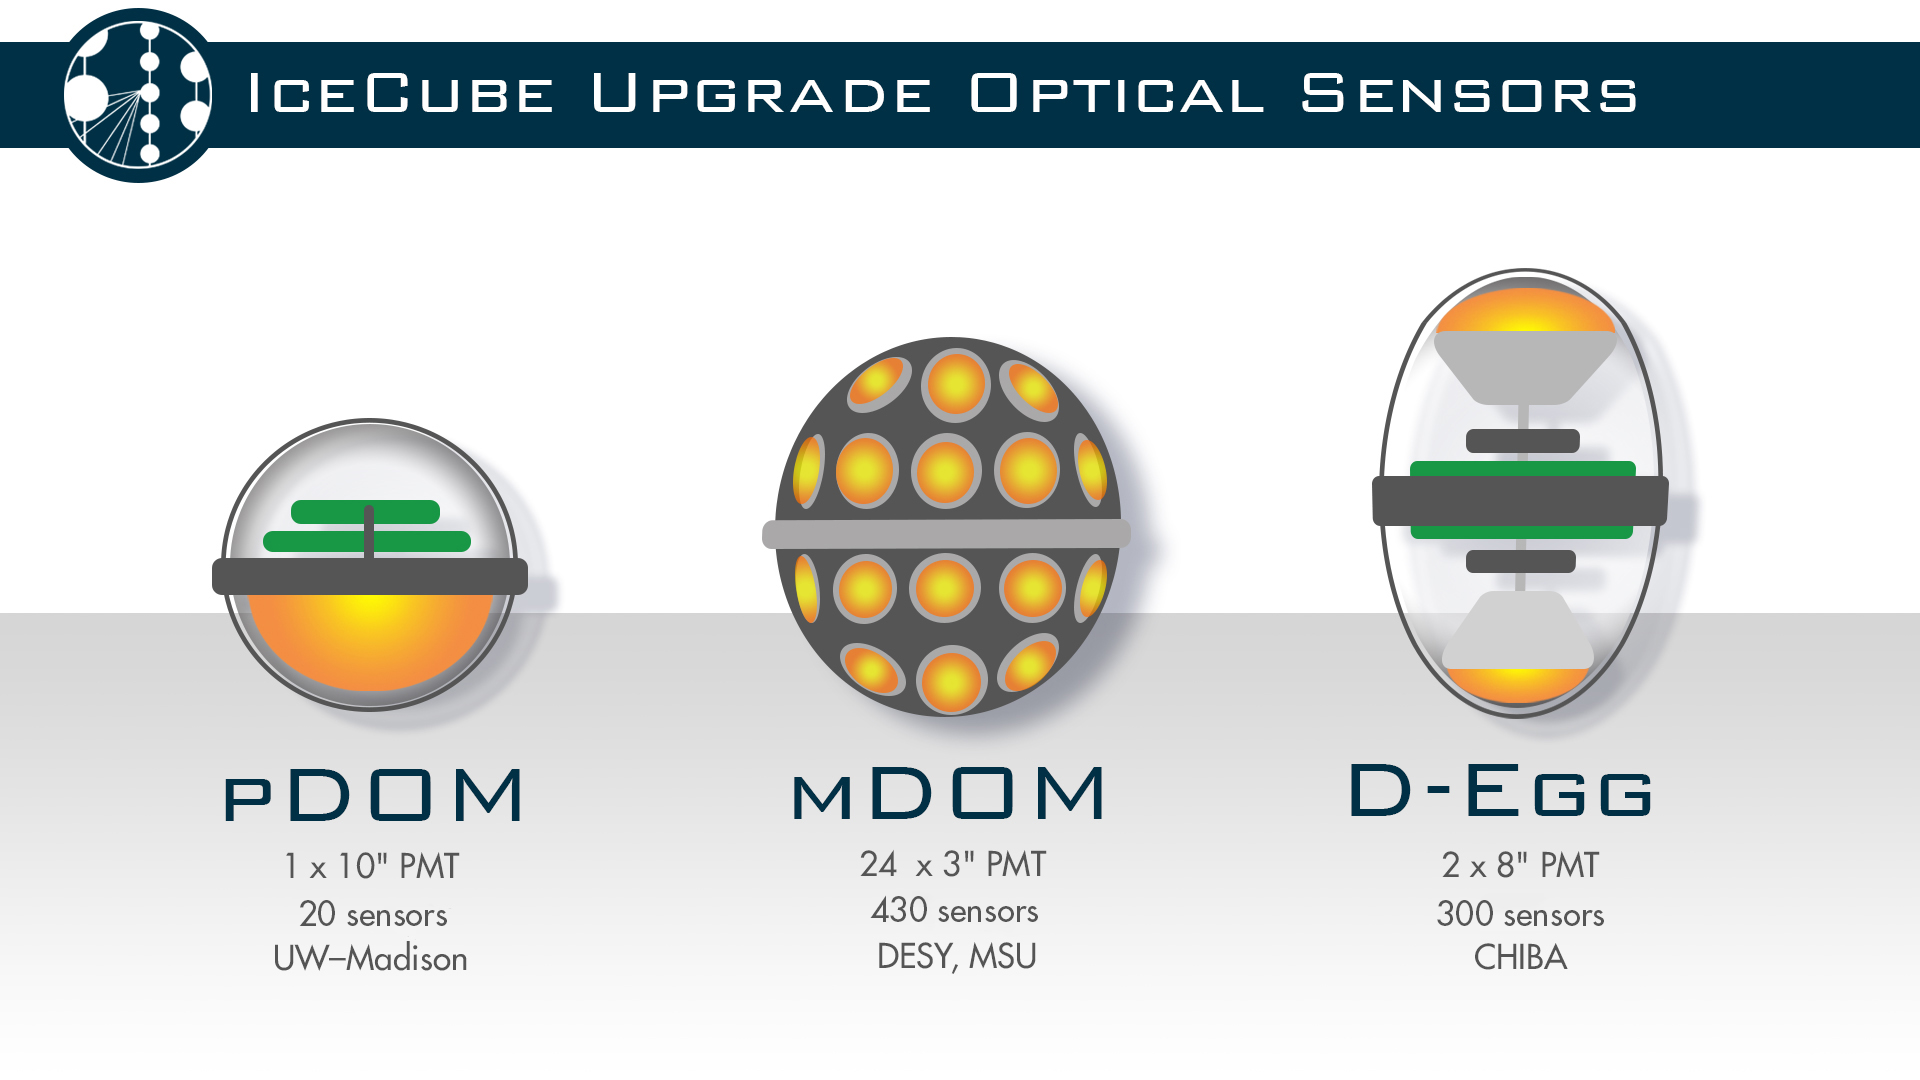 Three new optical sensor designs